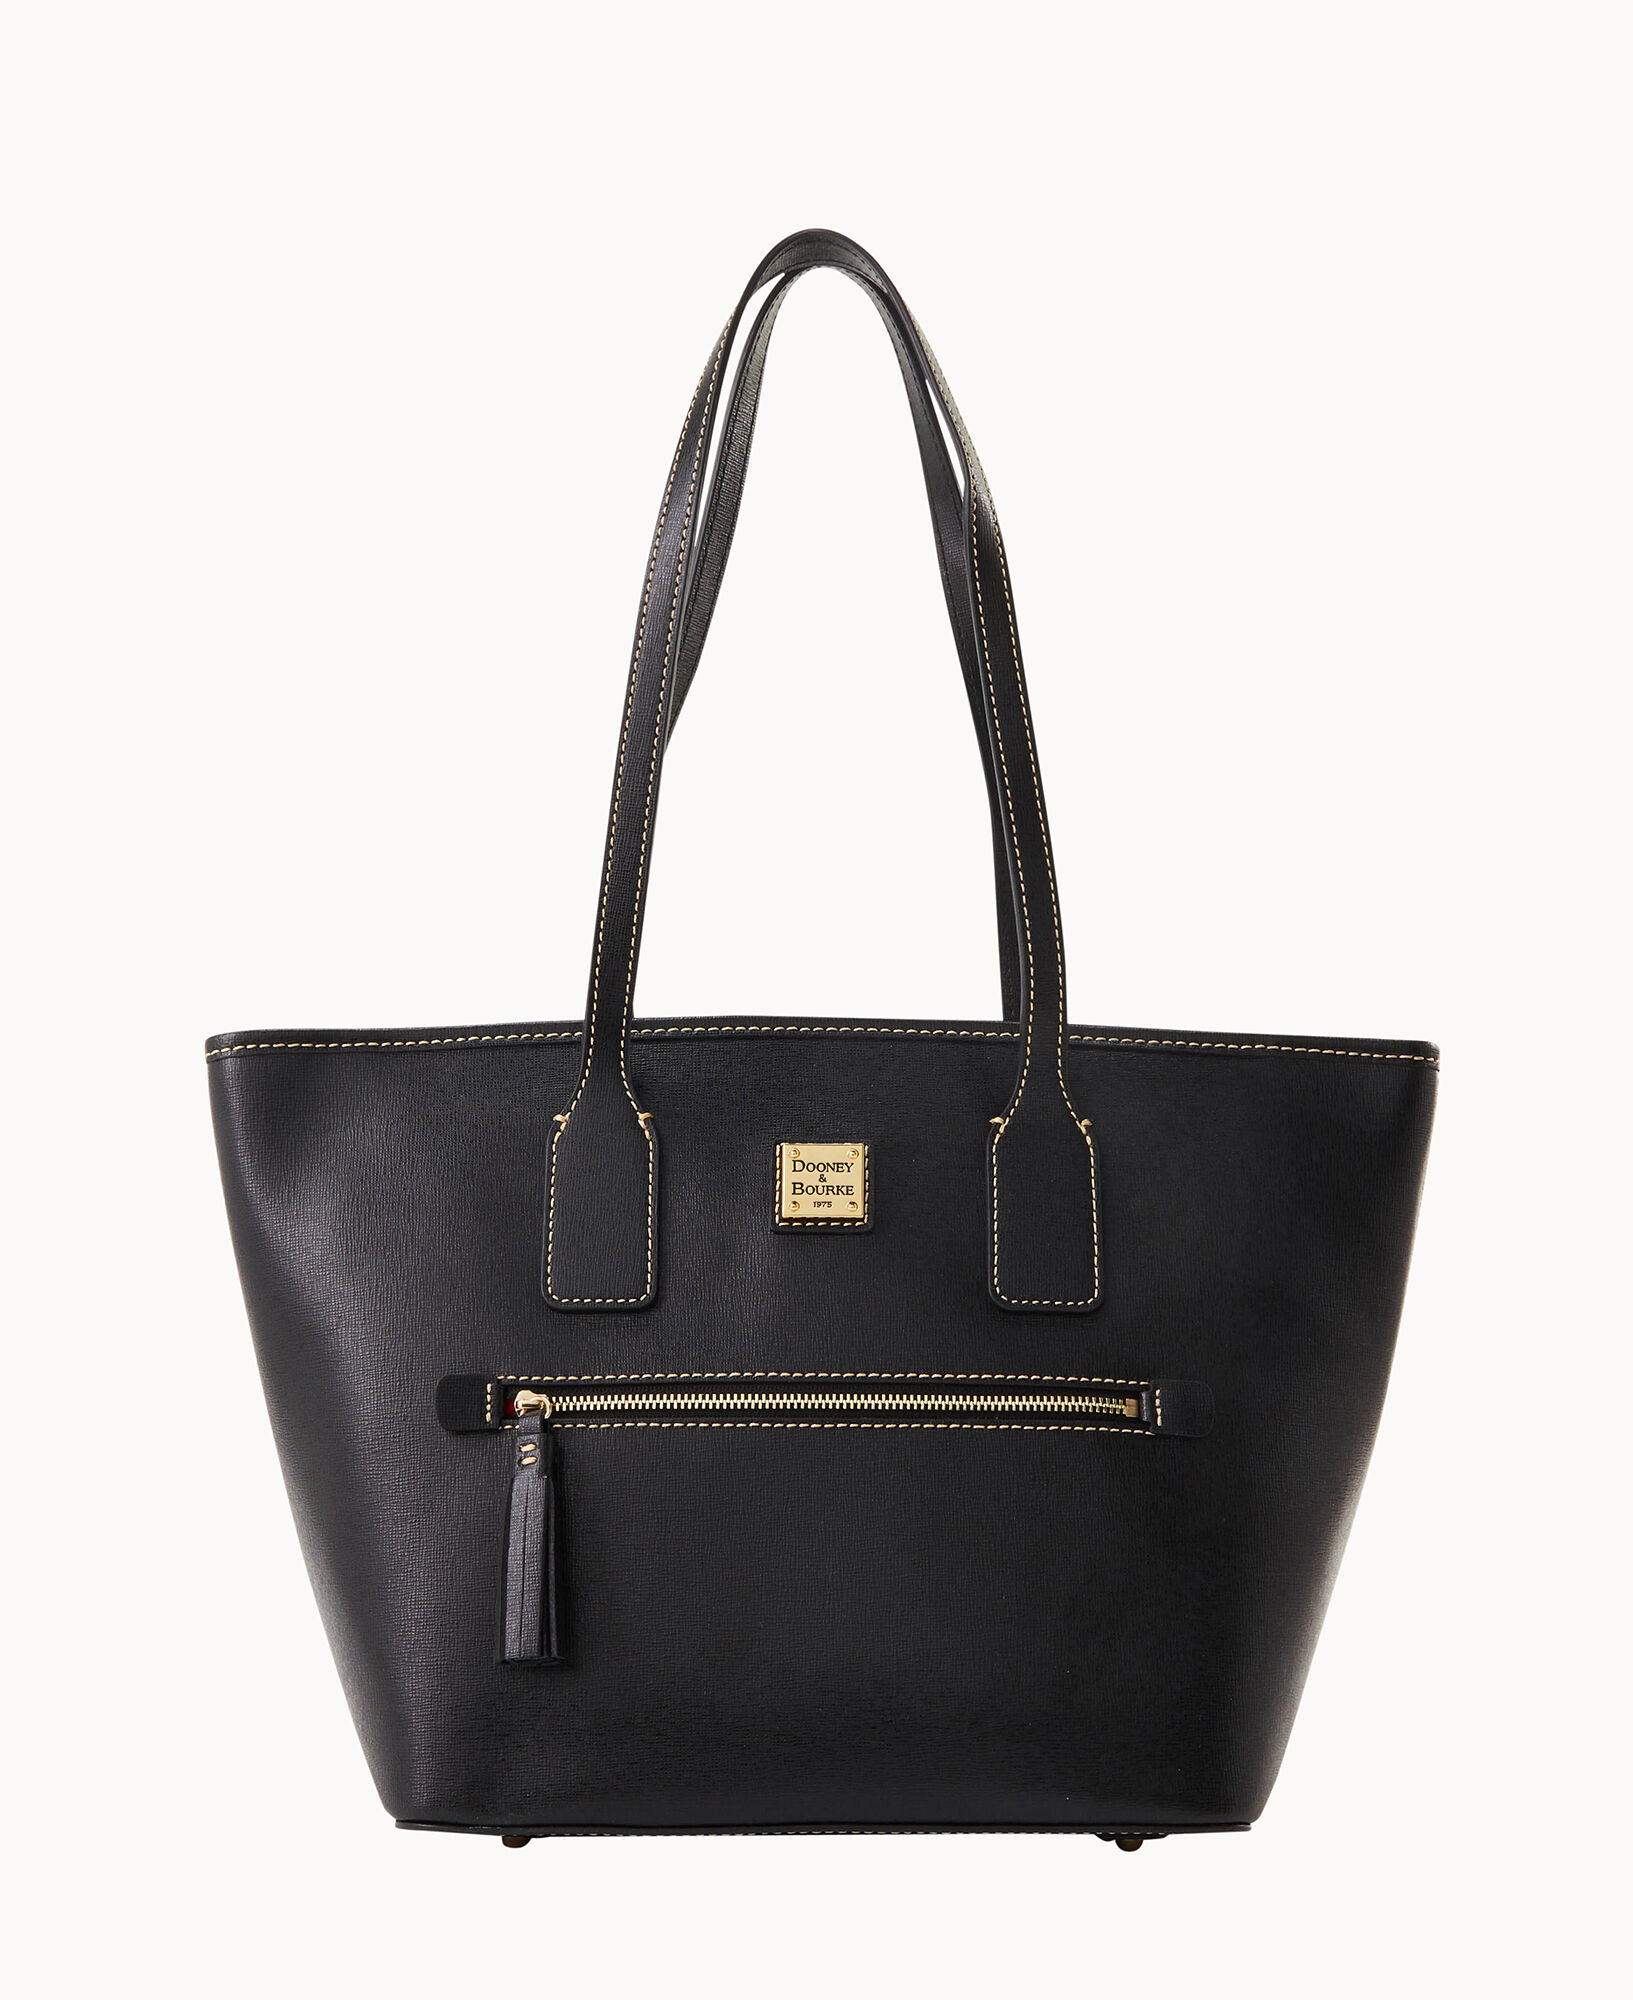 Dooney & Bourke Saffiano Small Tote Handbags Black : One Size